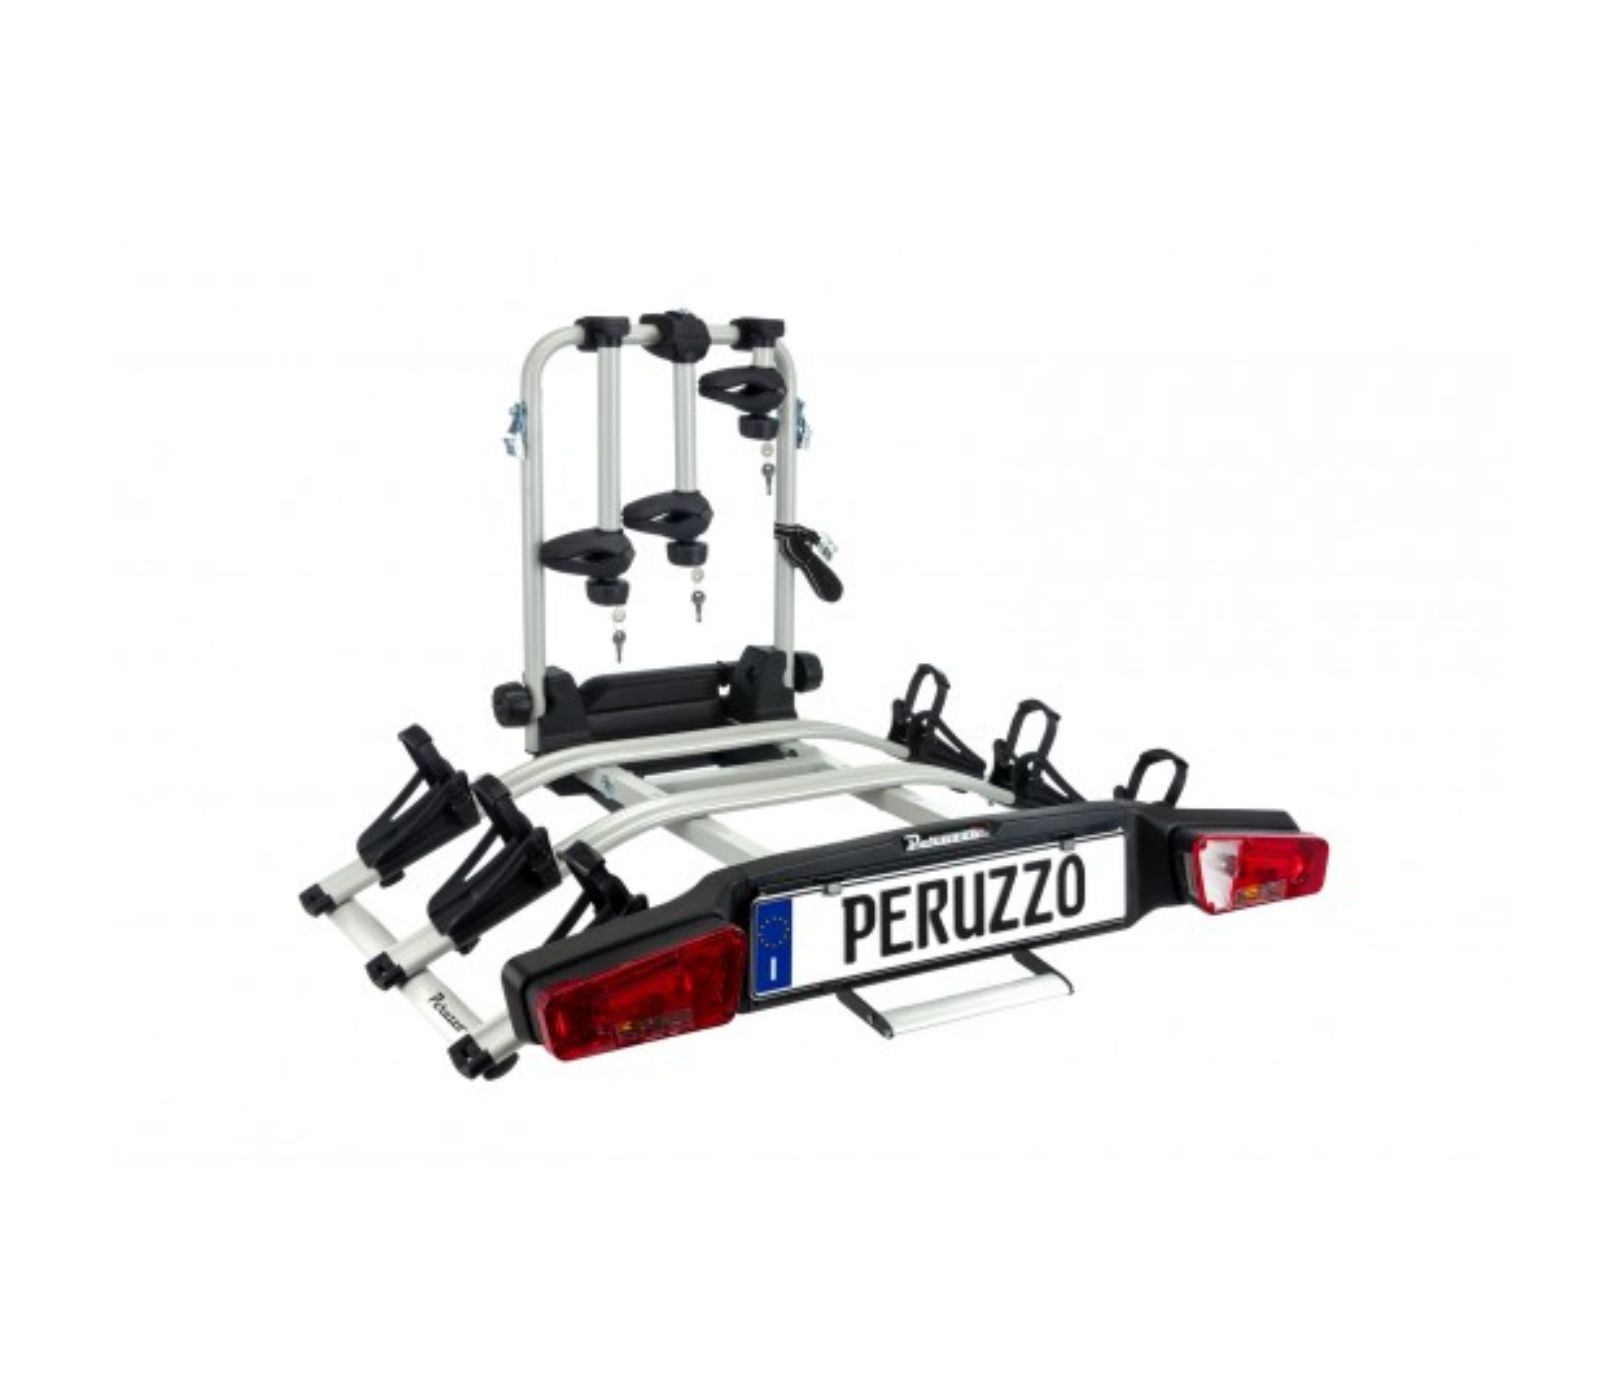 Peruzzo Zephyr 3 bike Tow Rack Bike Carrier